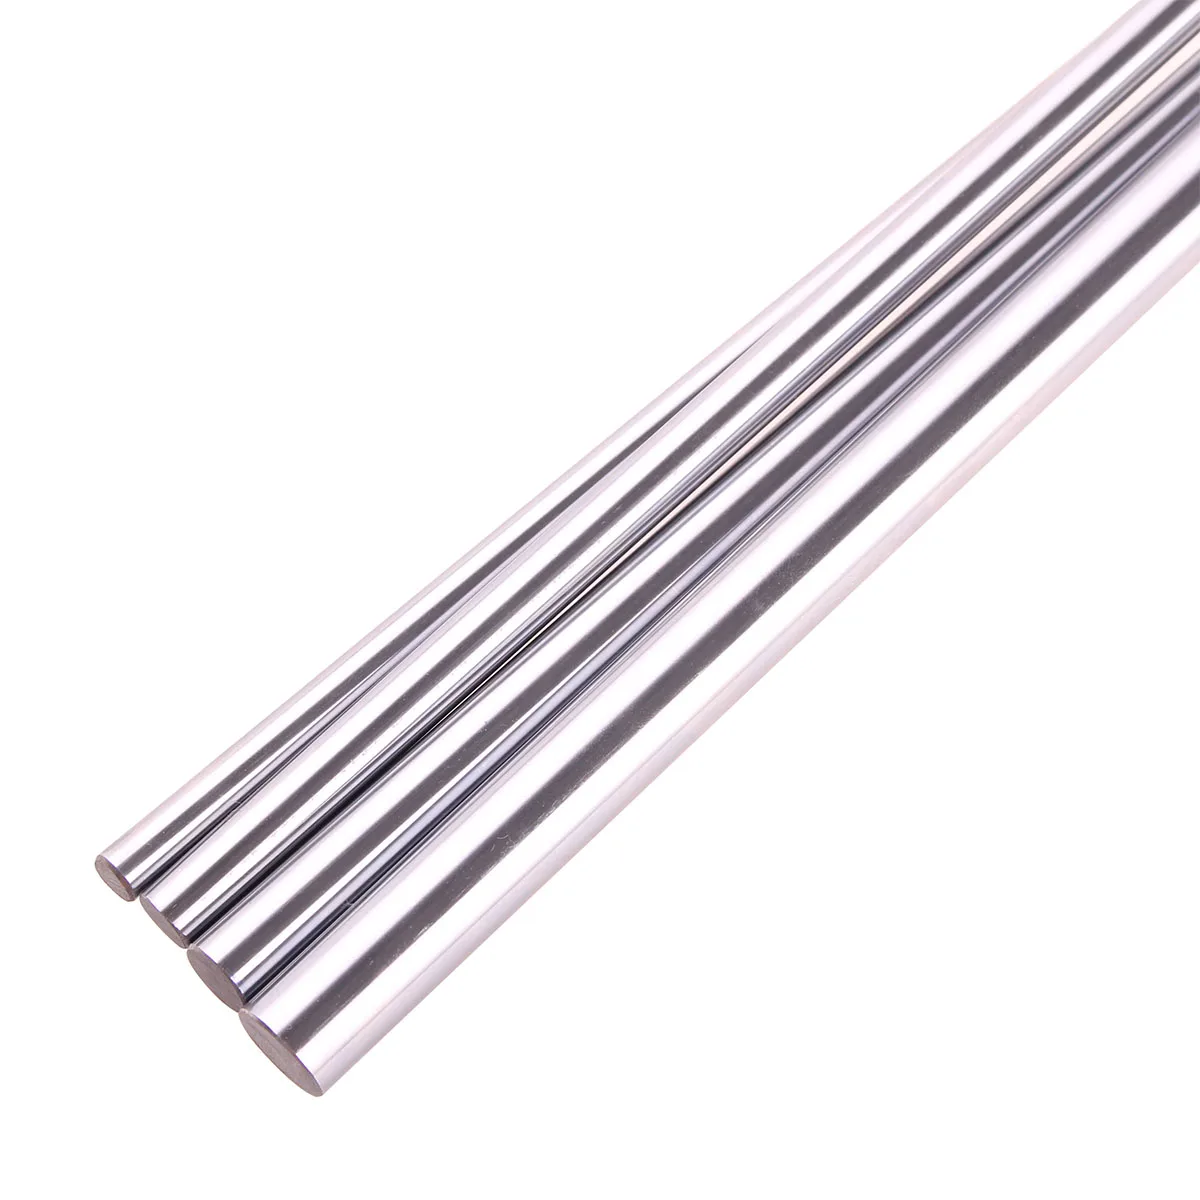 OD 6mm Chrome-plating CNC Cylinder Liner Rail Linear Shaft Optical Axis Rod 